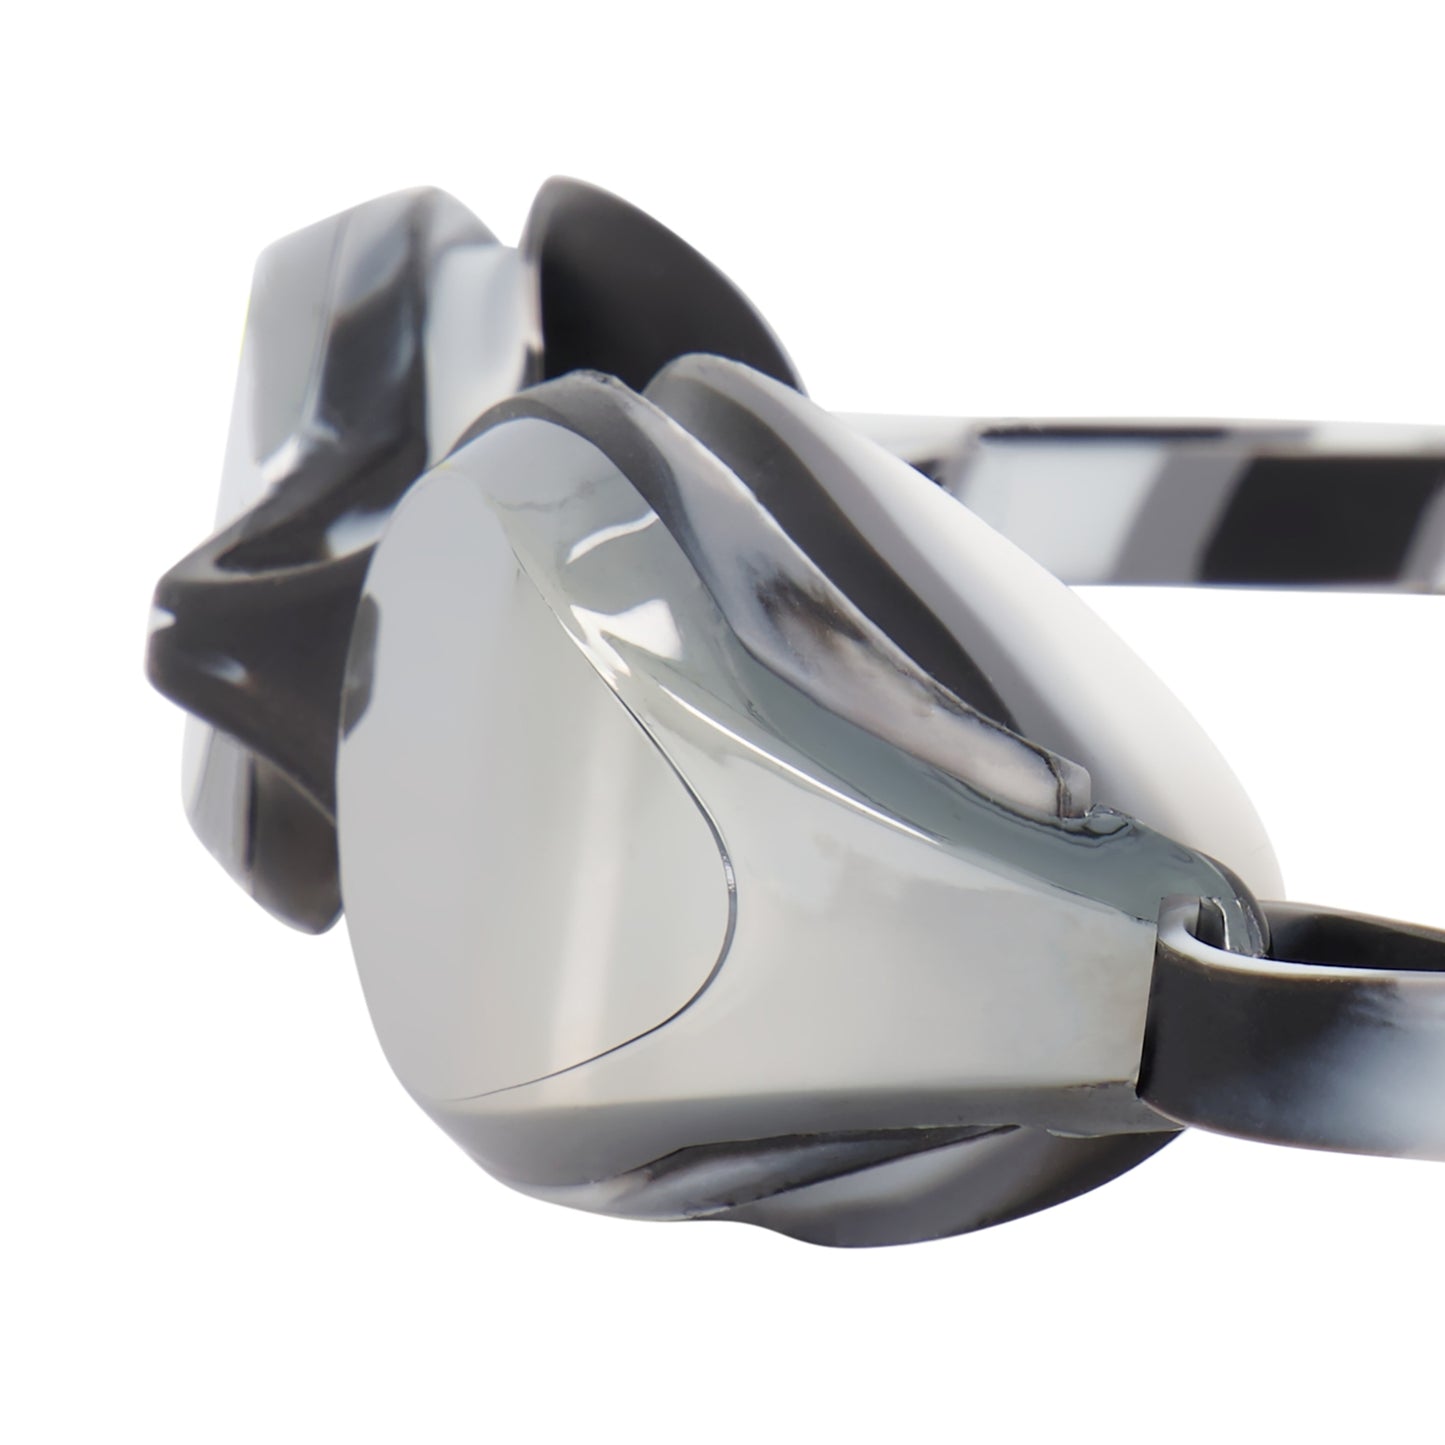 Speedo Unisex Hyper Flyer Mirrored Junior Ages 6-14 Goggle - Silver